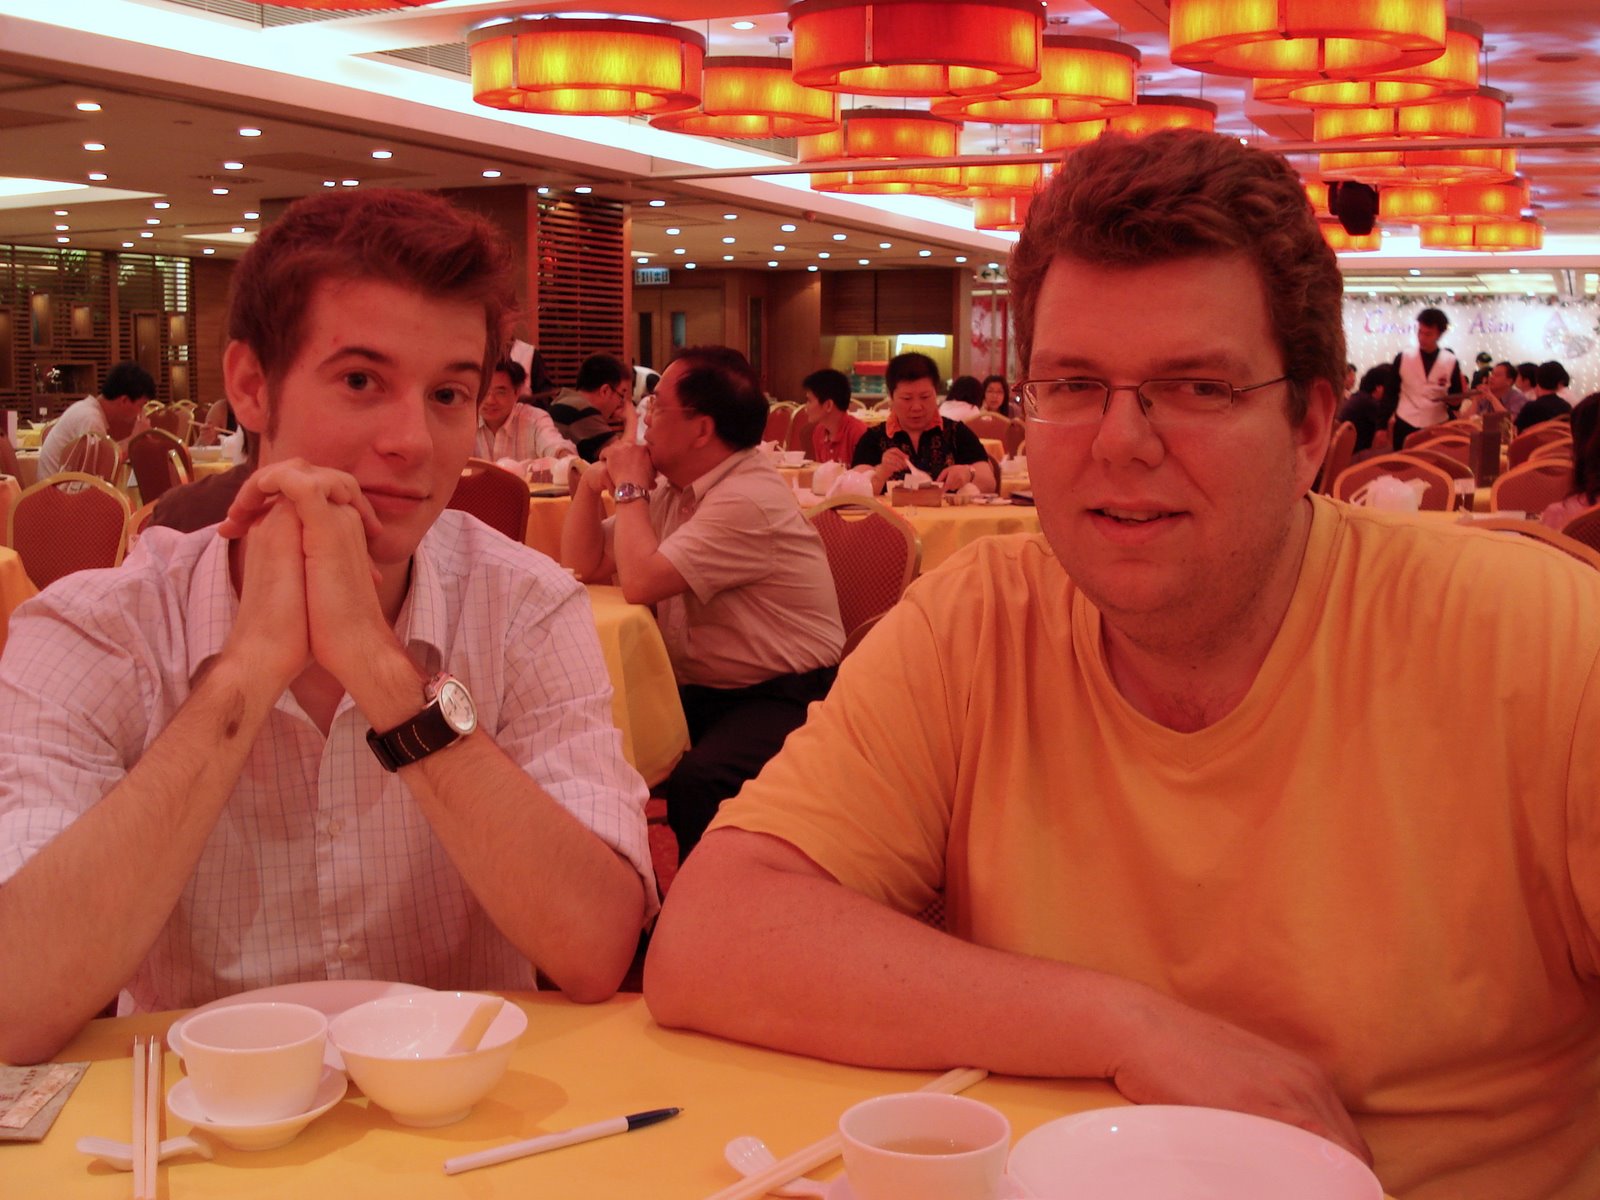 Patrick and Peter at dim-sum restaurant